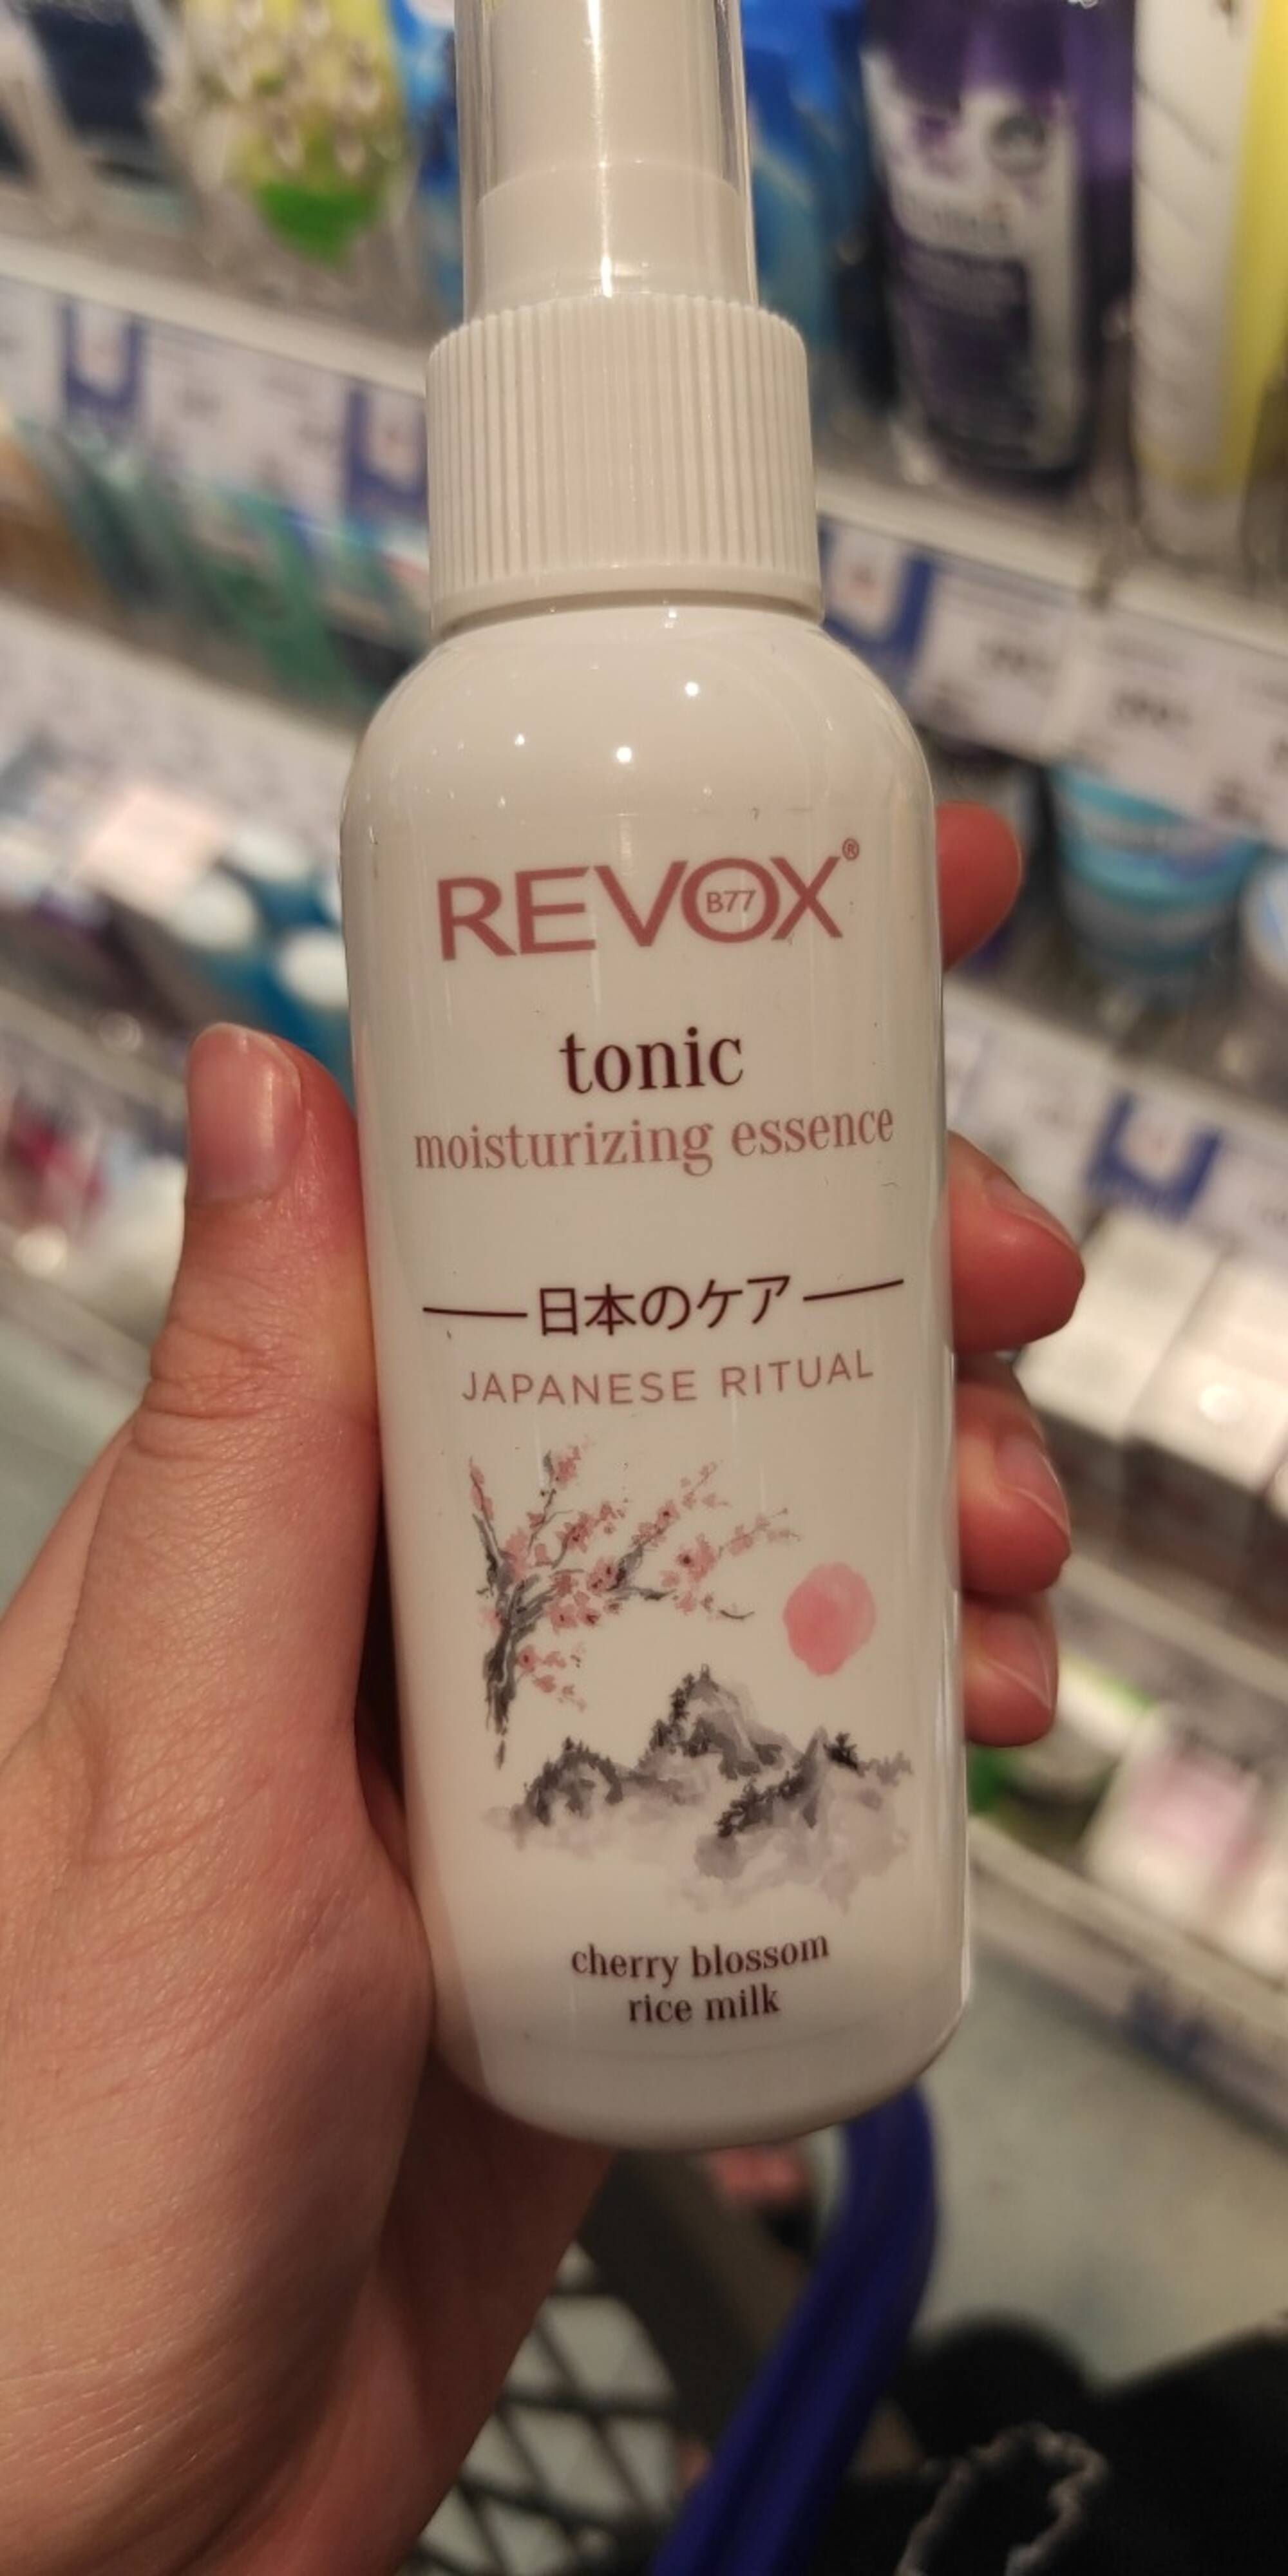 REVUELE - Revox B77 - Tonic moisturizing essence